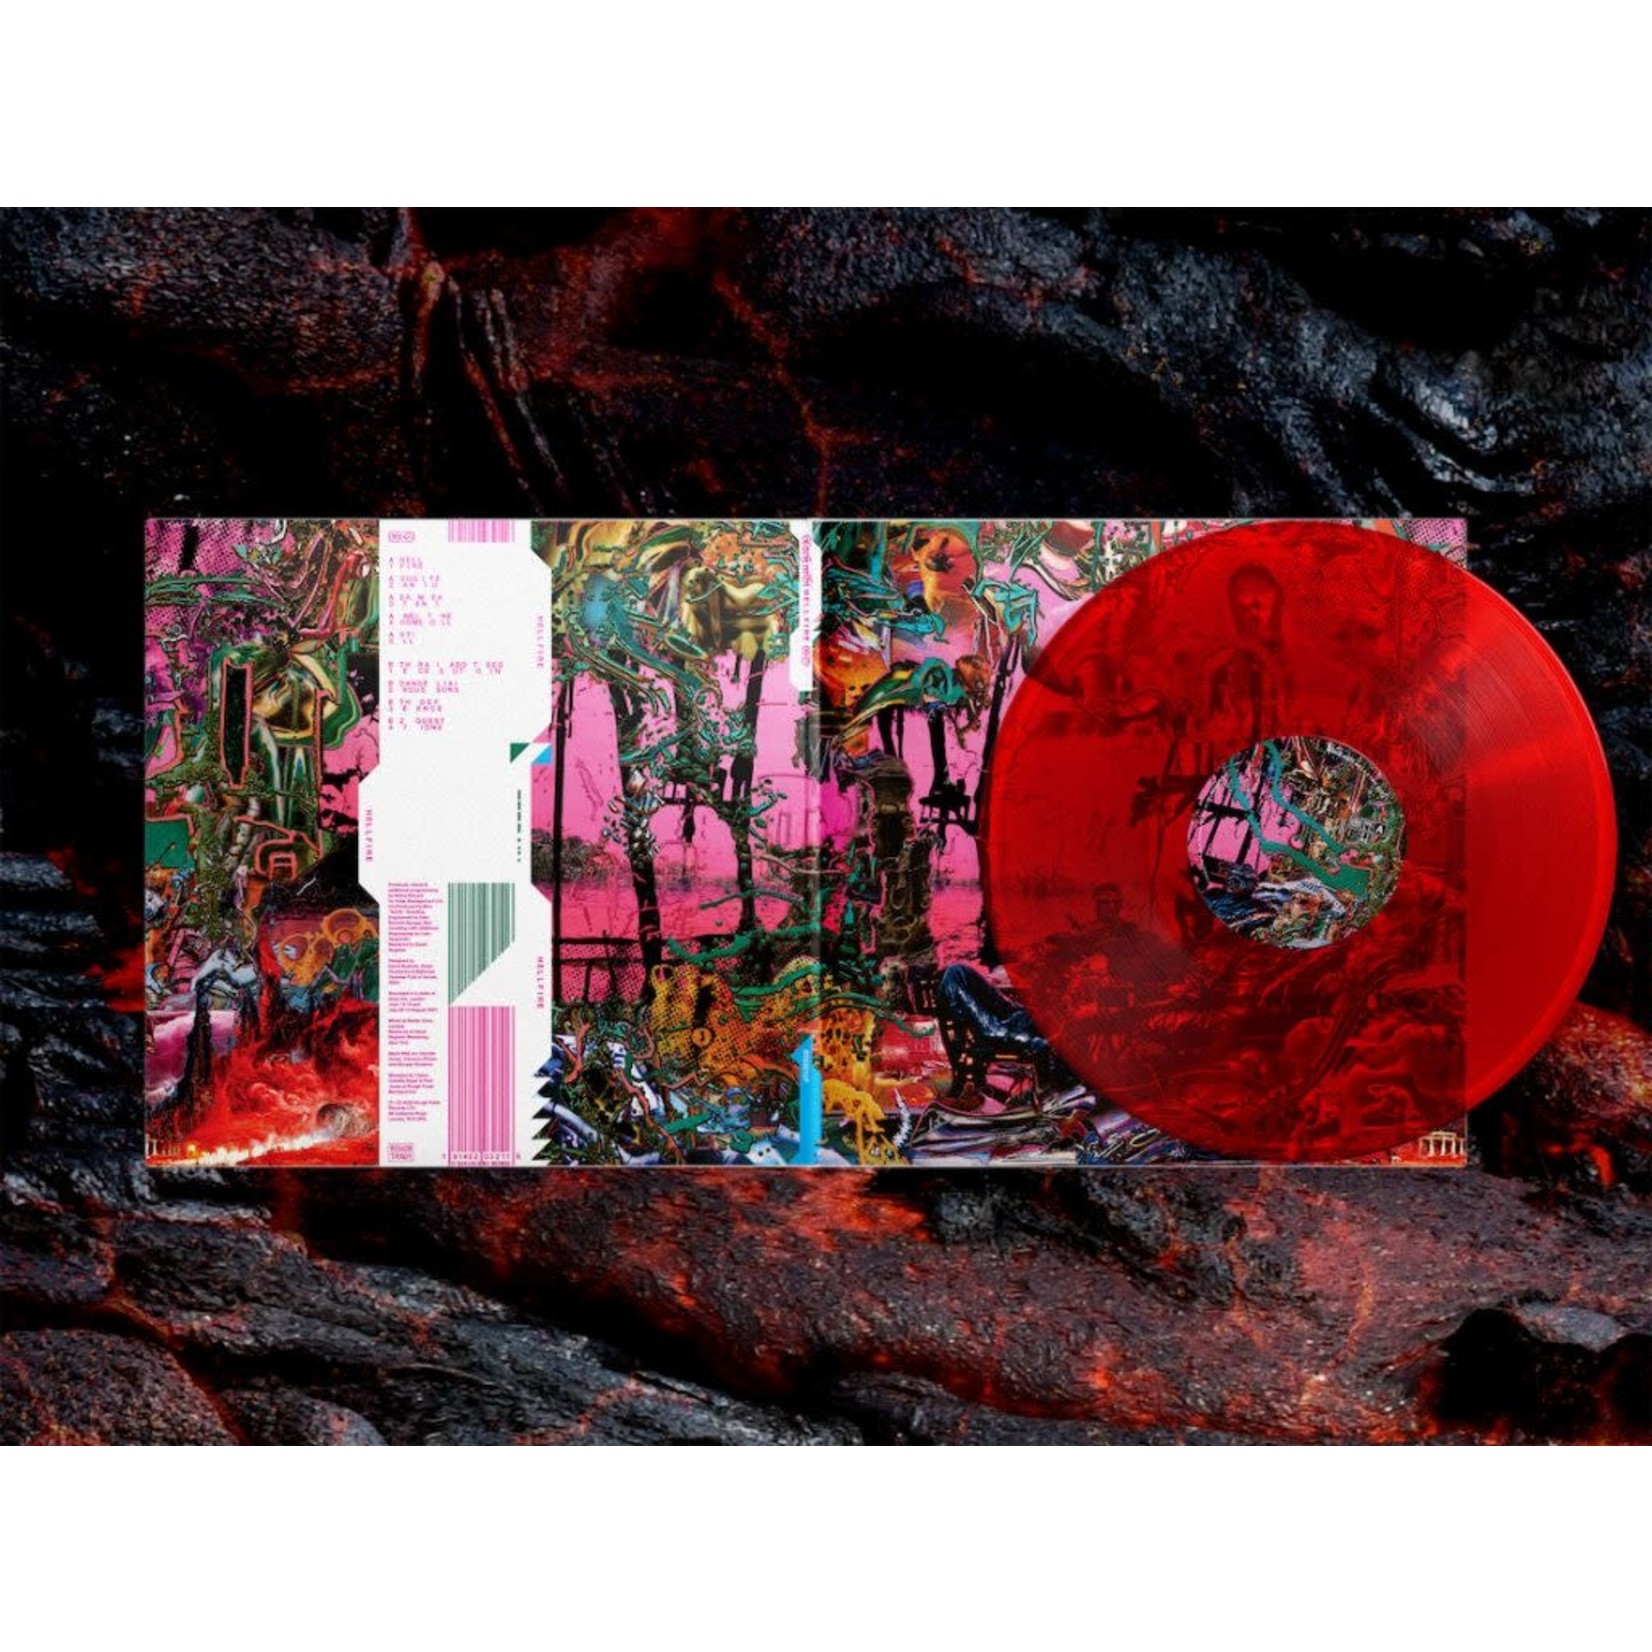 [New] Black Midi - Hellfire (indie shop edition, solid red vinyl)